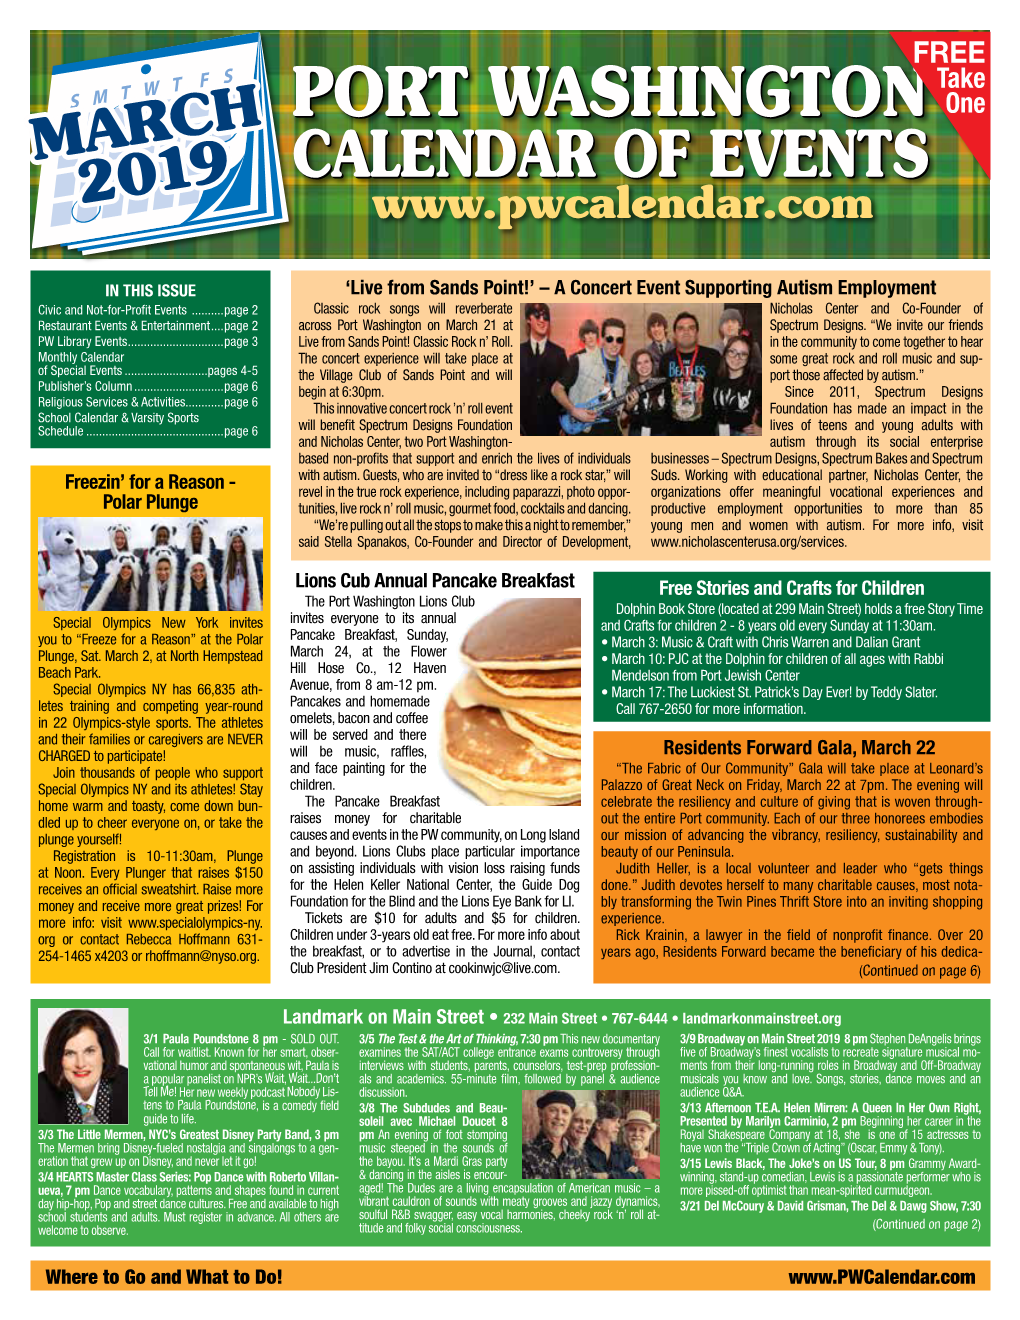 March 2019 Calendarcalendar Ofof Eventsevents